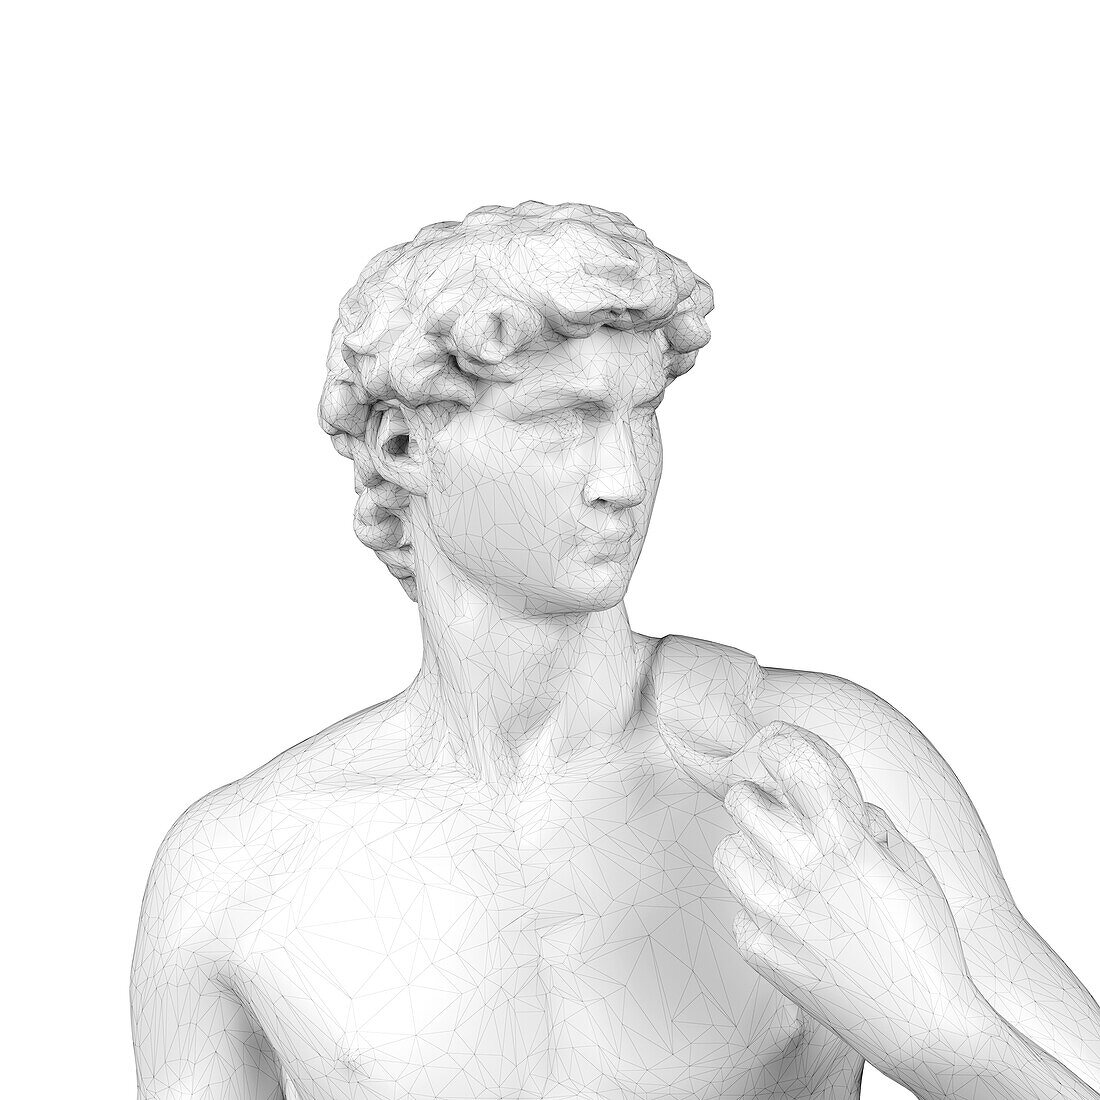 Wireframe David statue, illustration